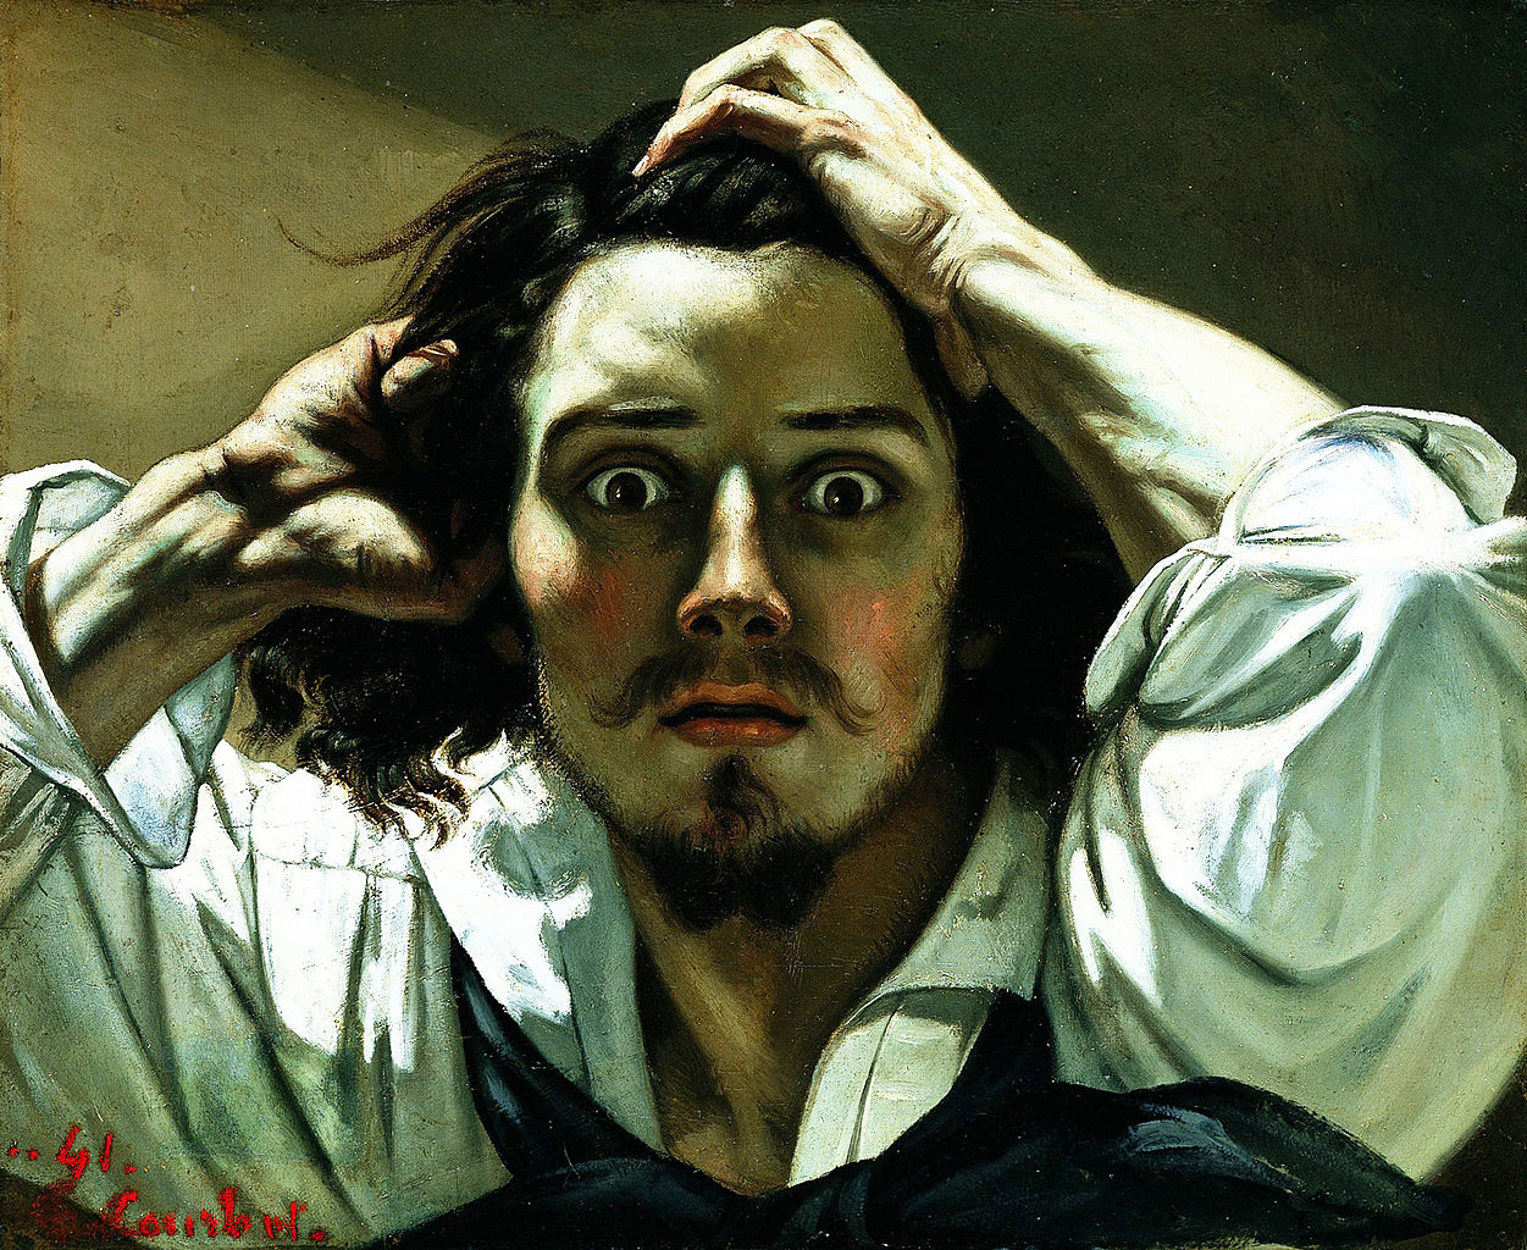 Gustave Courbet - June 10, 1819 - December 31, 1877